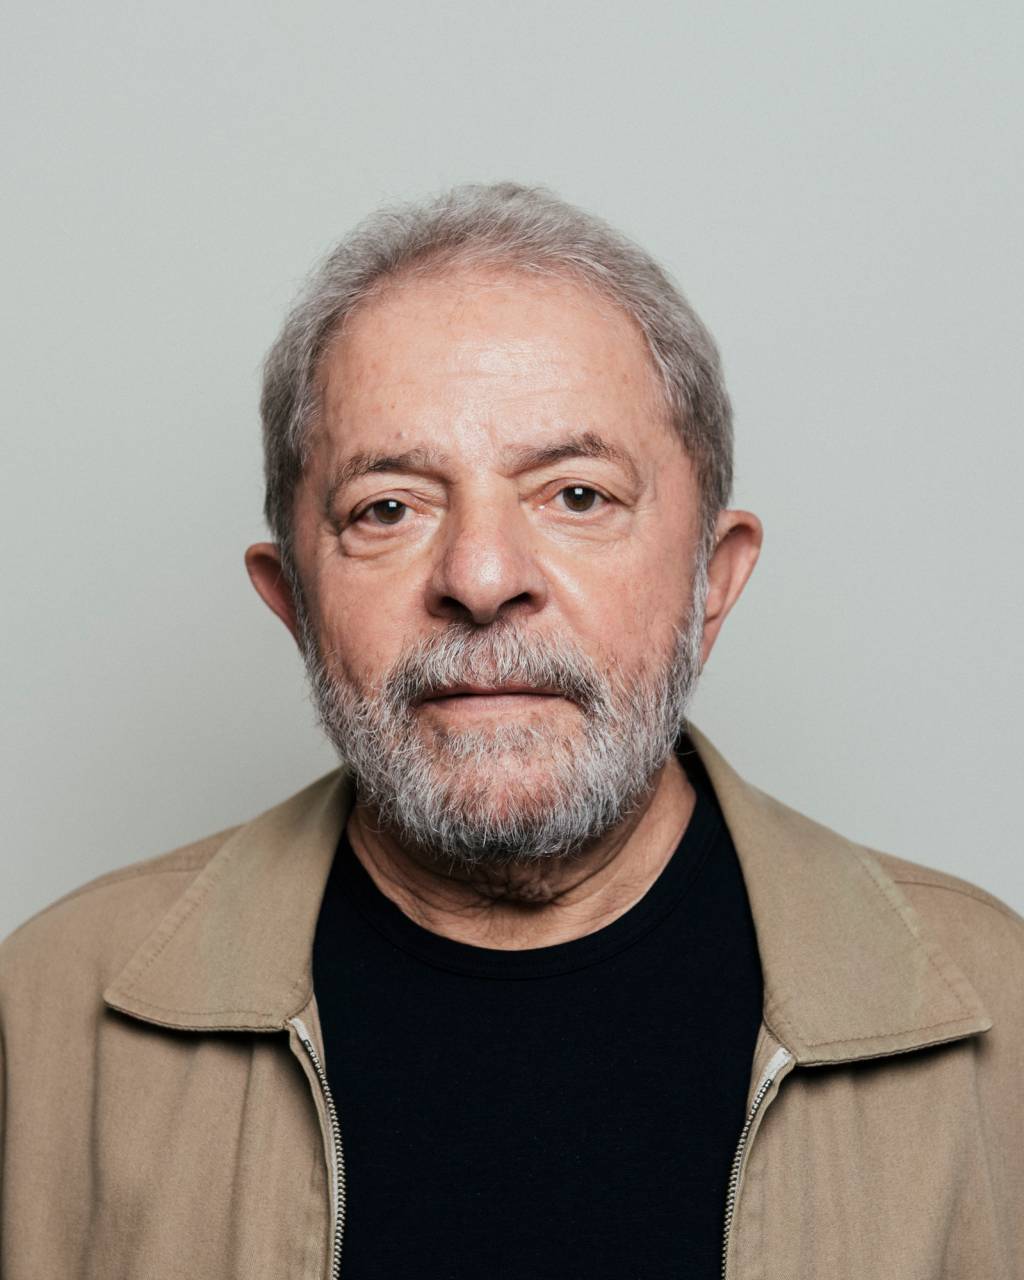 Luiz Inácio Lula da Silva, ex-presidente do Brasil, São Paulo, 2016.